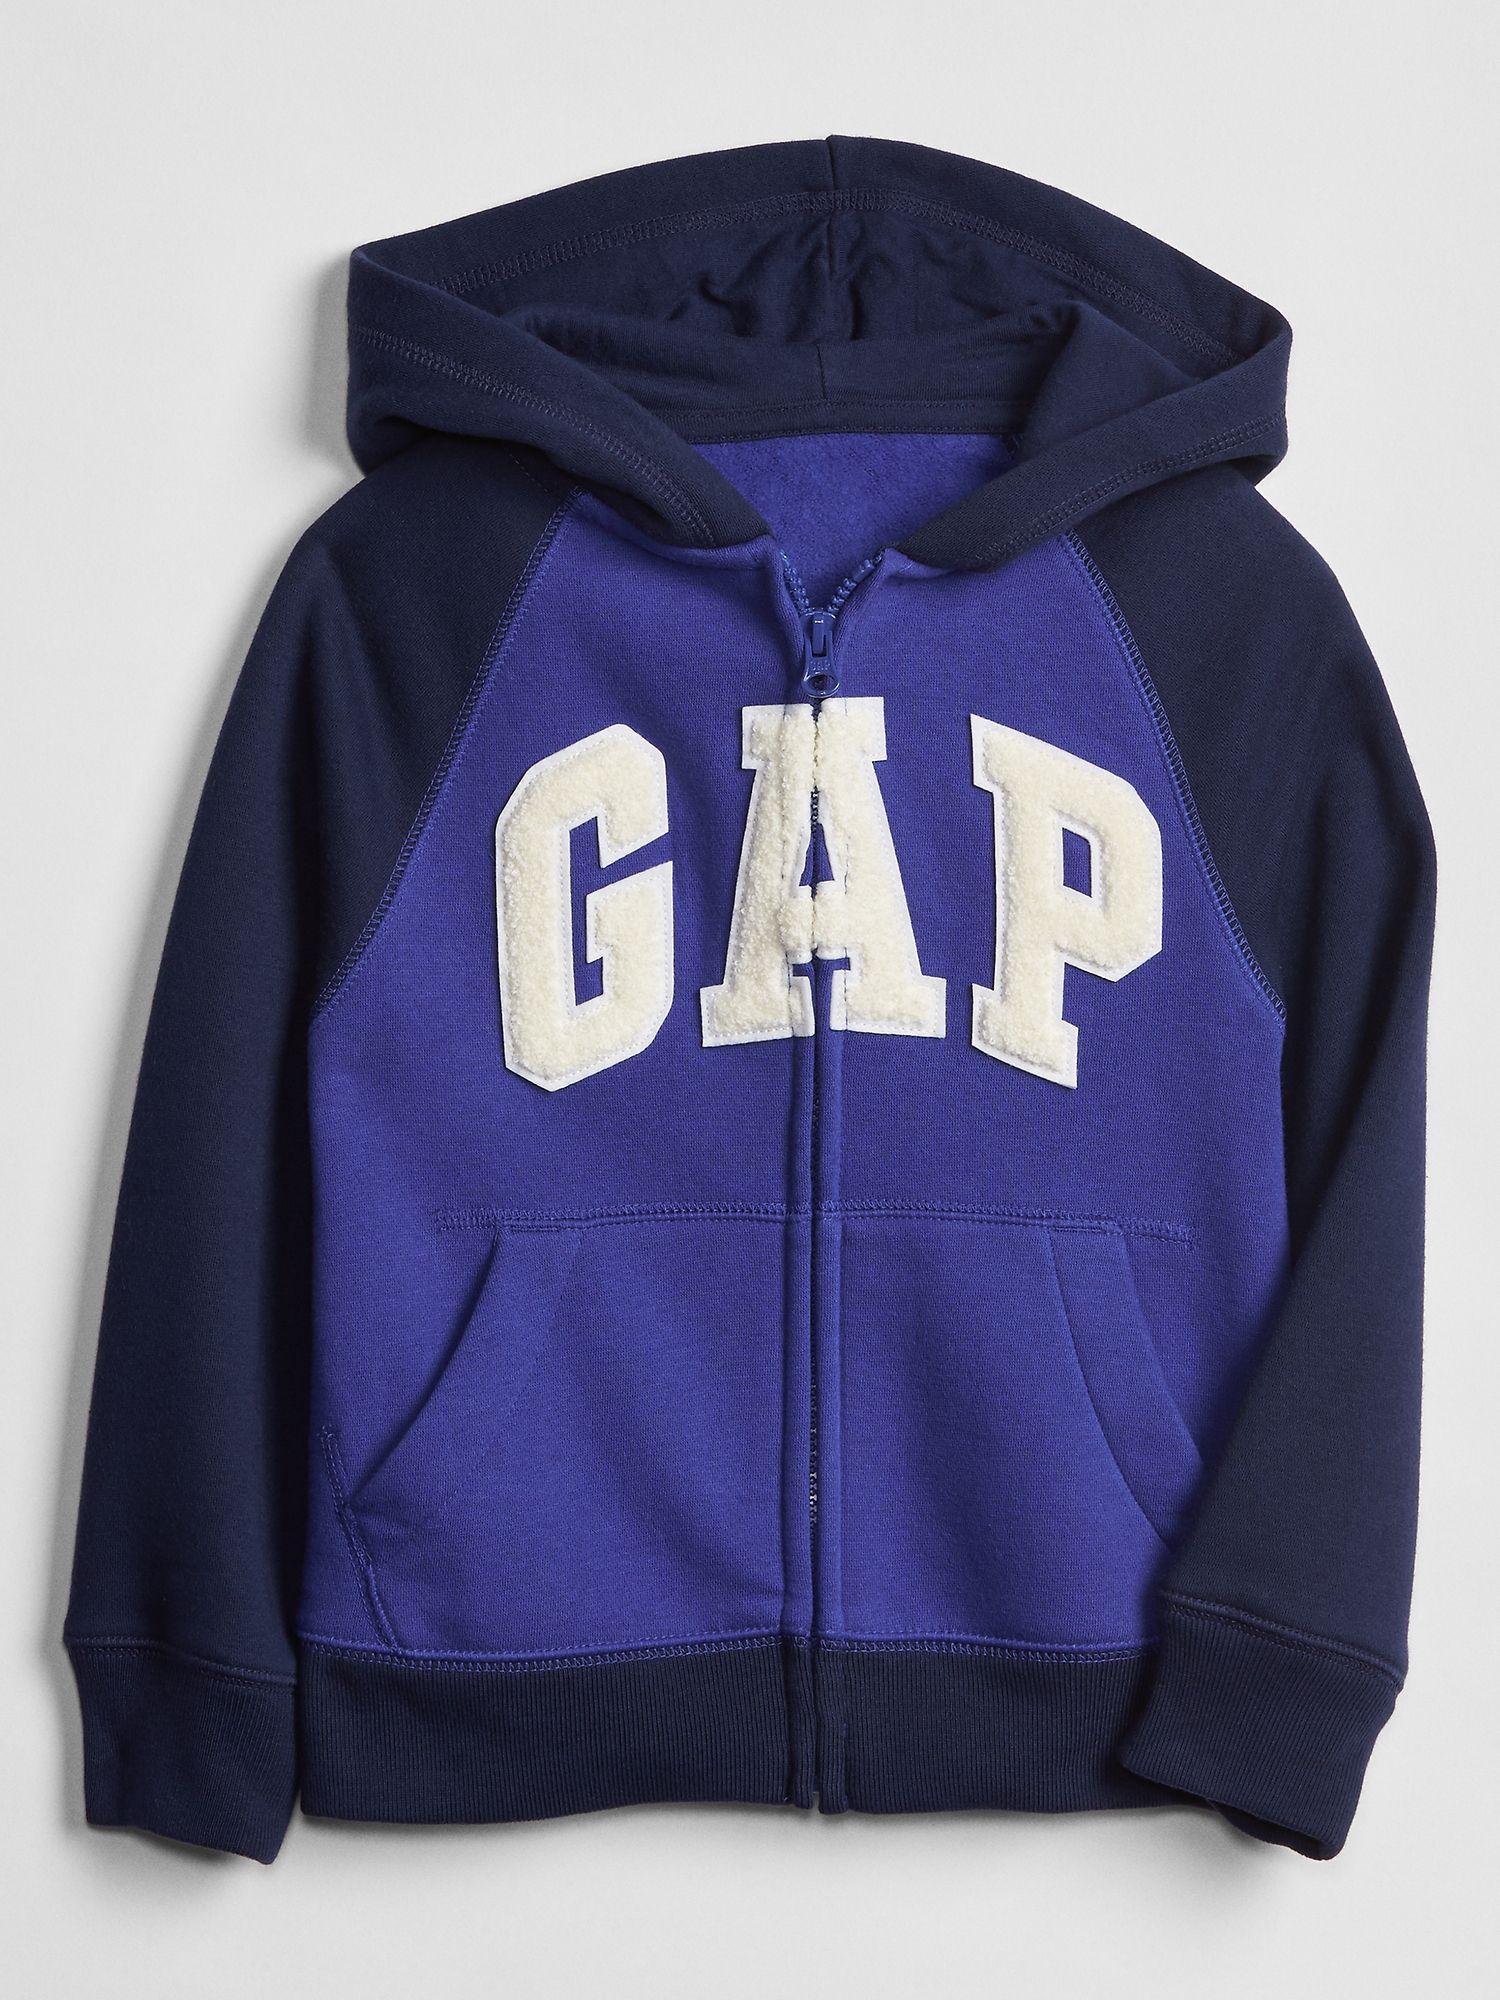 Gap Factory Logo - LogoDix